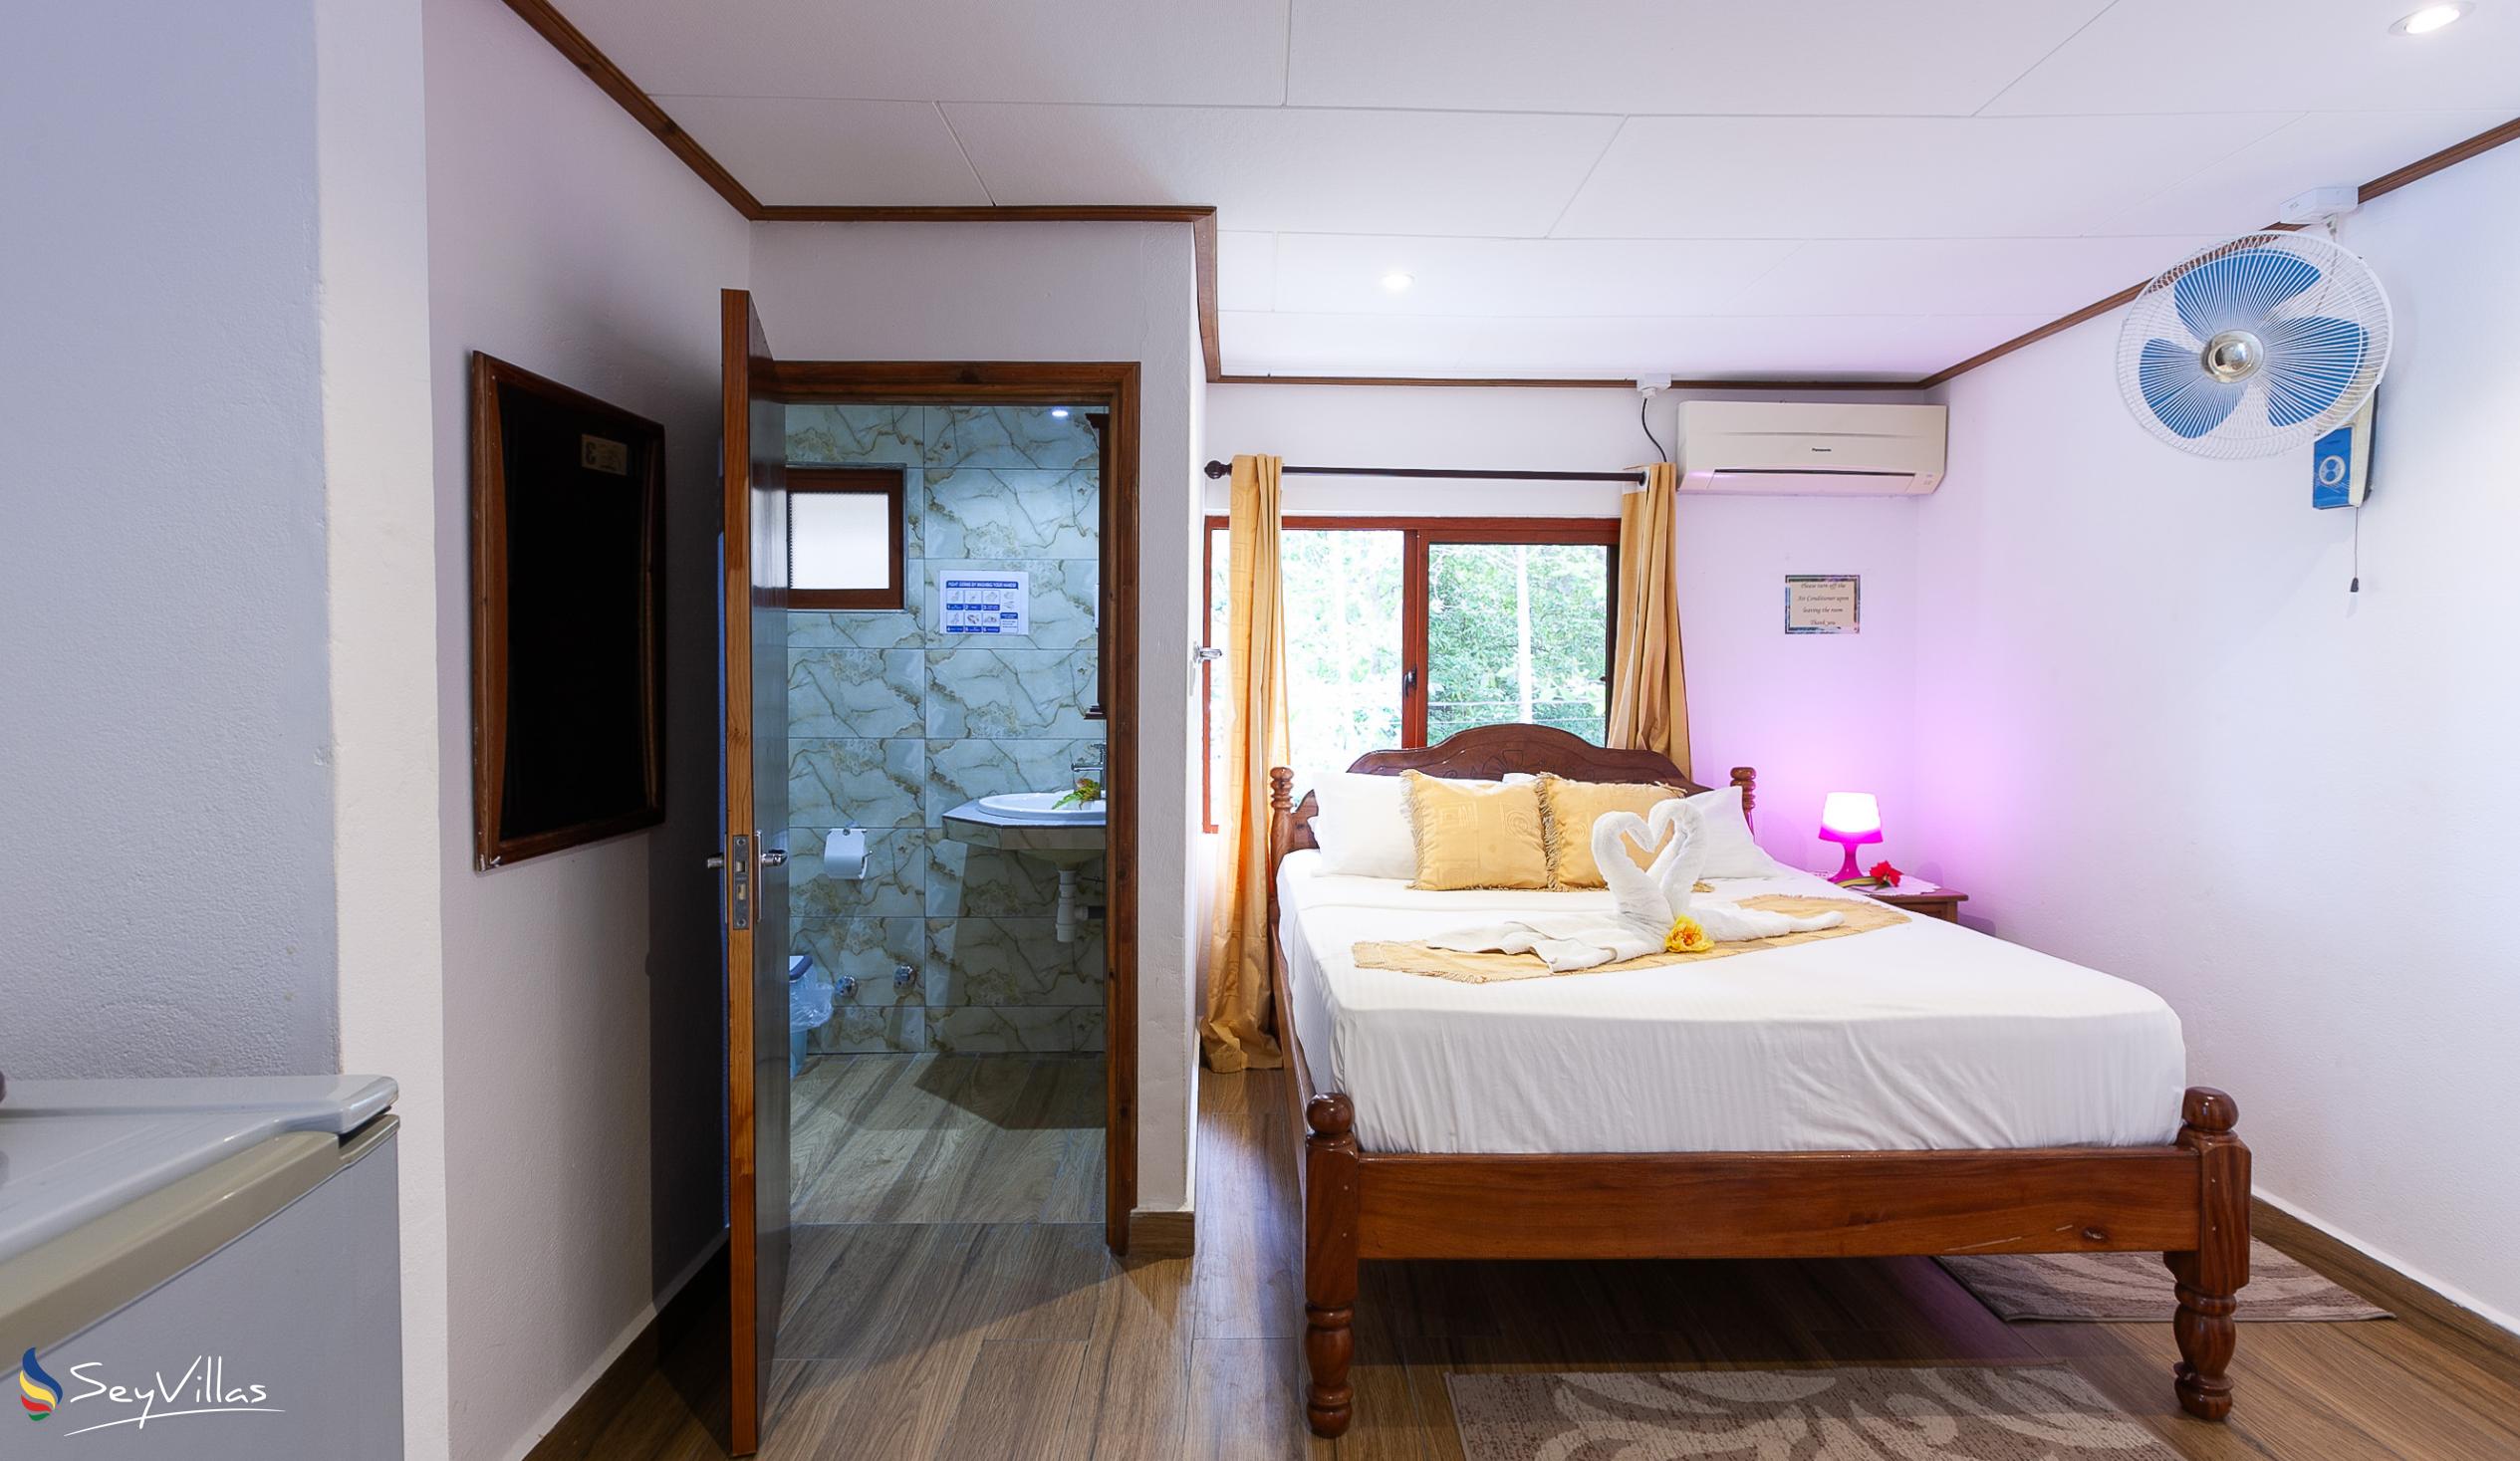 Photo 91: Tannette's Villa - Standard Queen Room - La Digue (Seychelles)